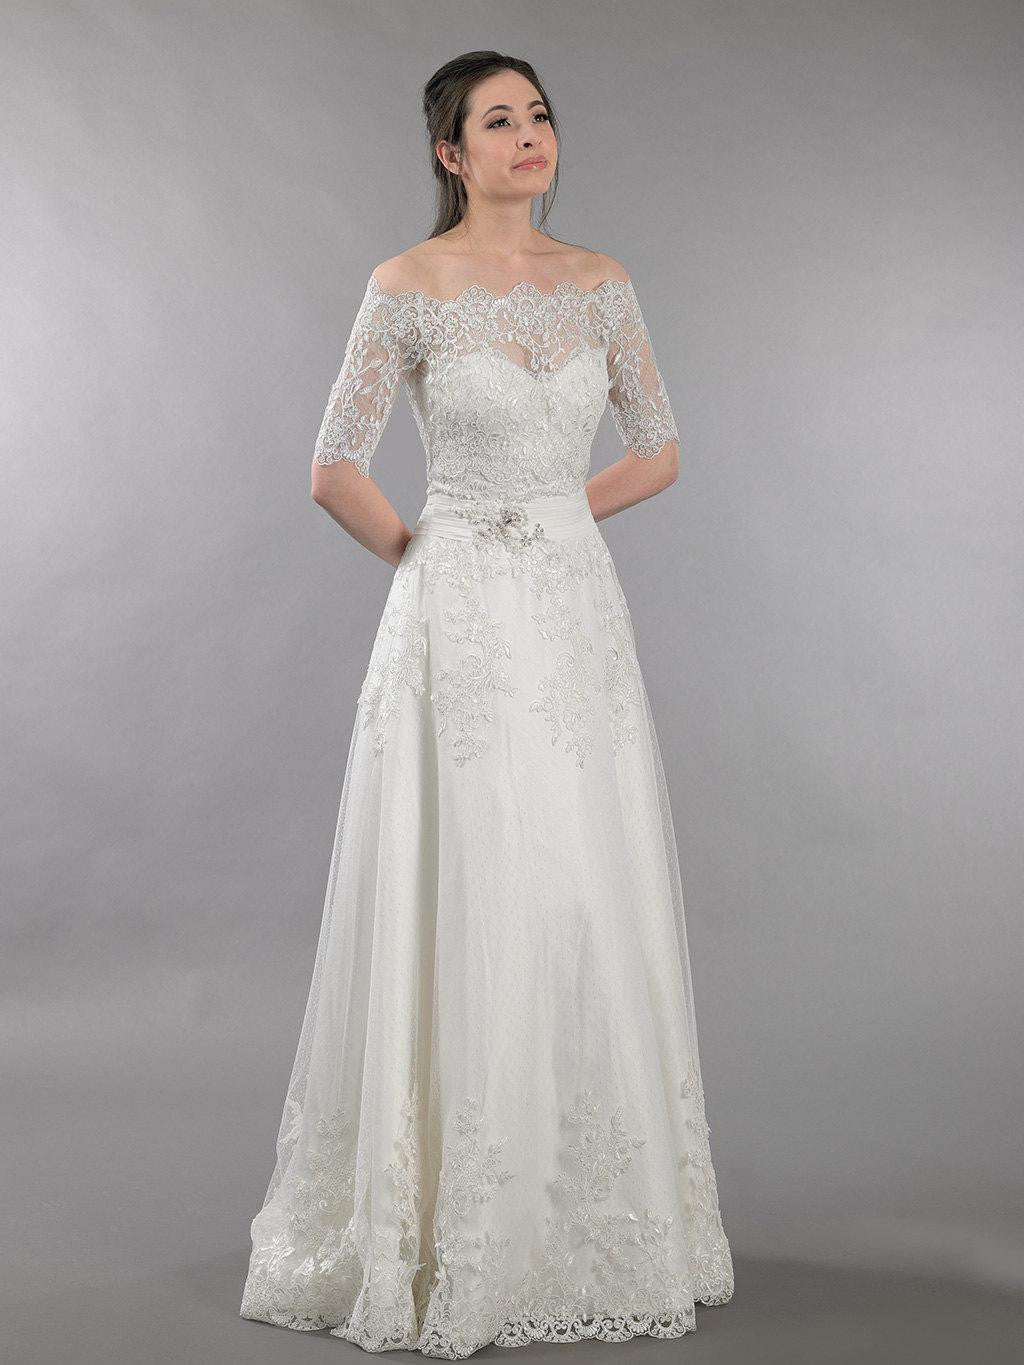 Lace Wedding Dress With Off Shoulder Bolero Alencon Lace